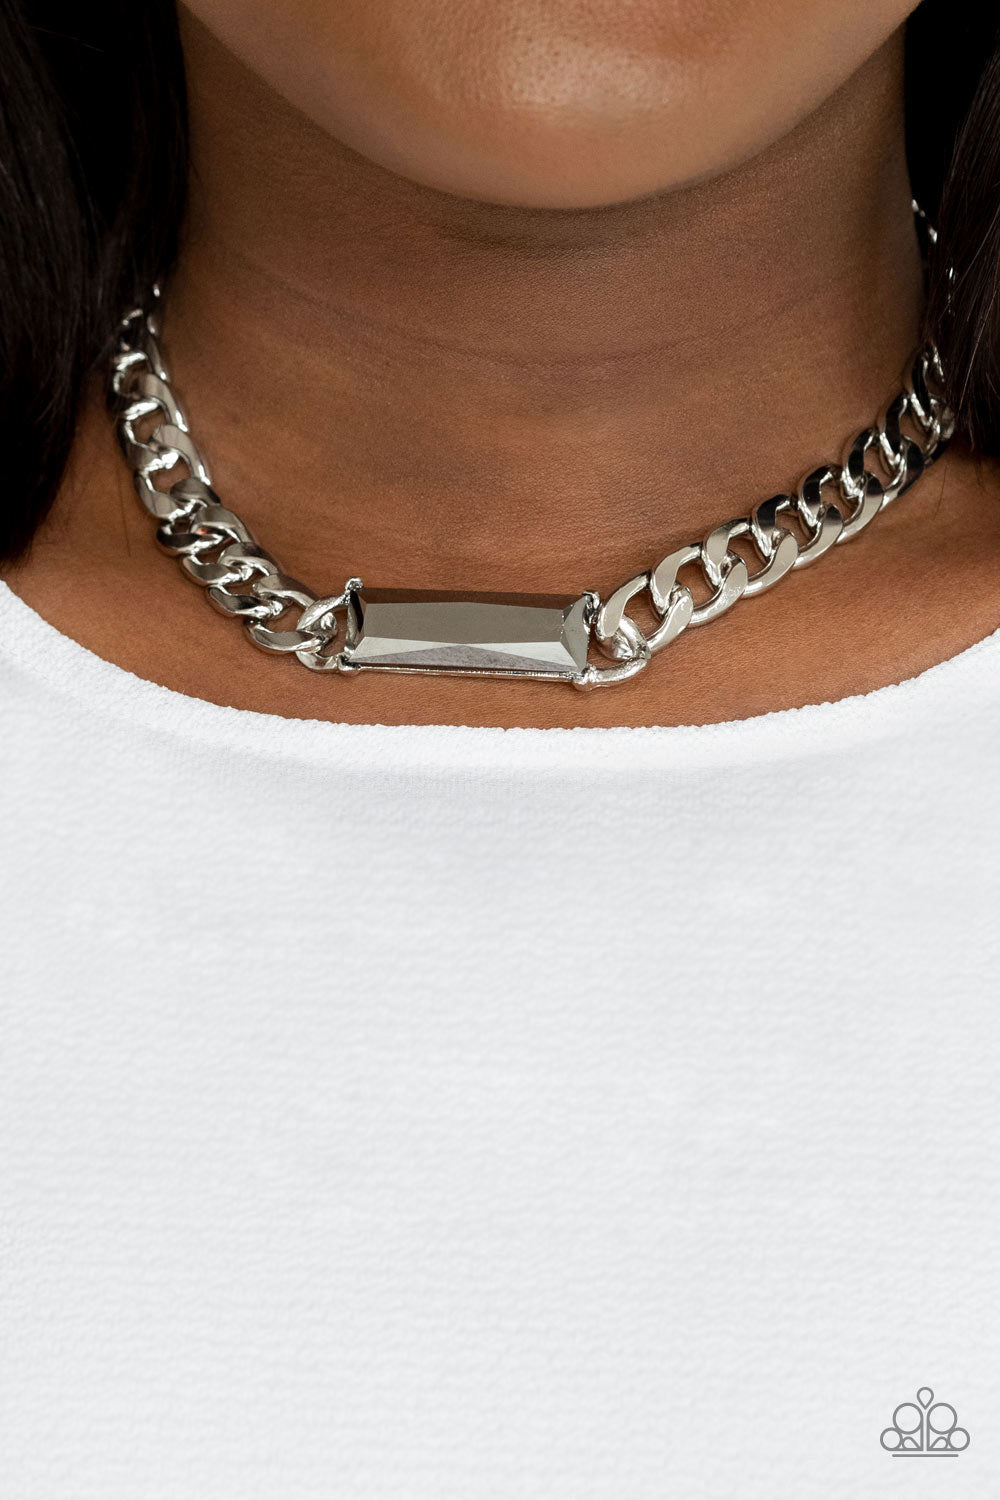 Urban Royalty - Silver necklace Paparazzi